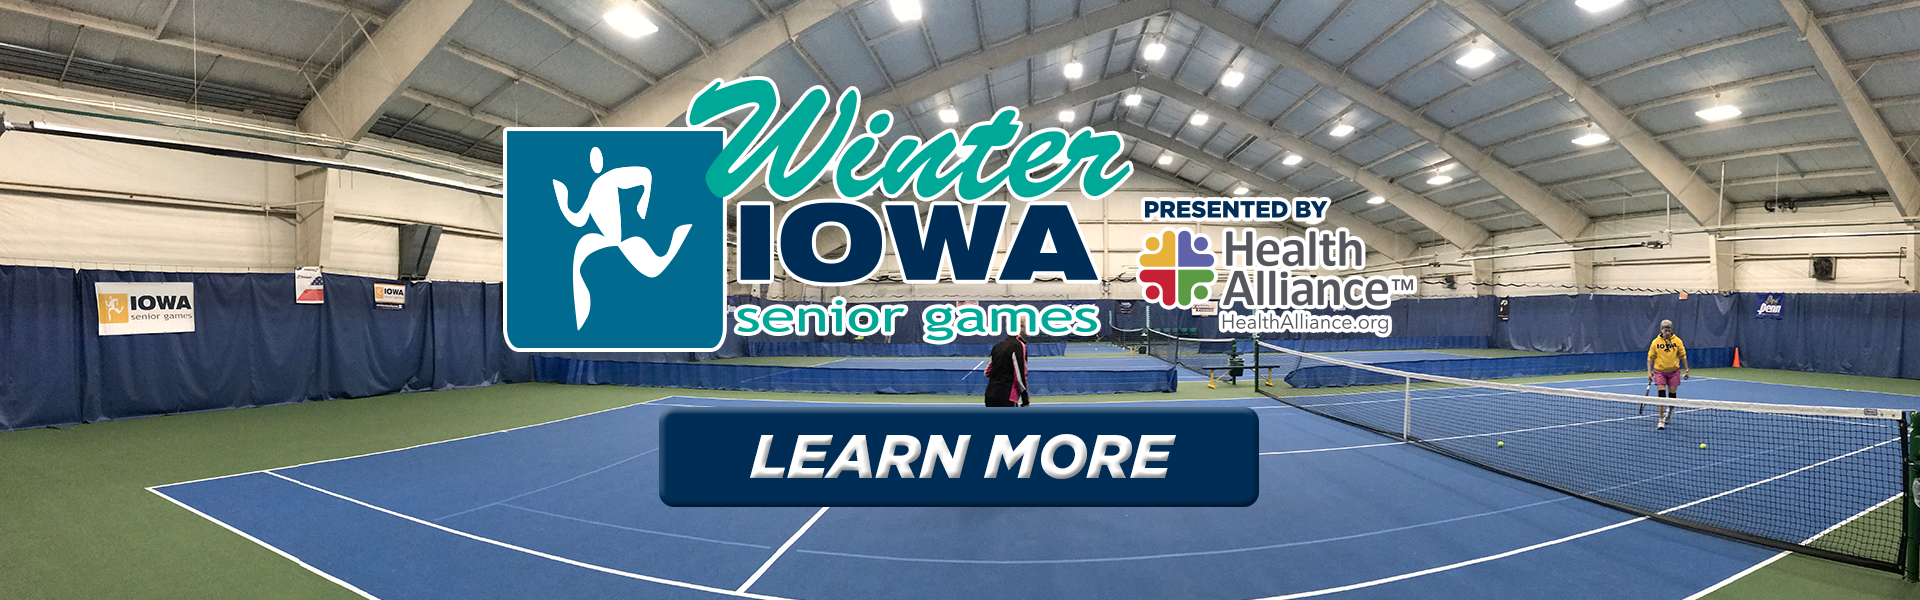 Winter Iowa Senior Games